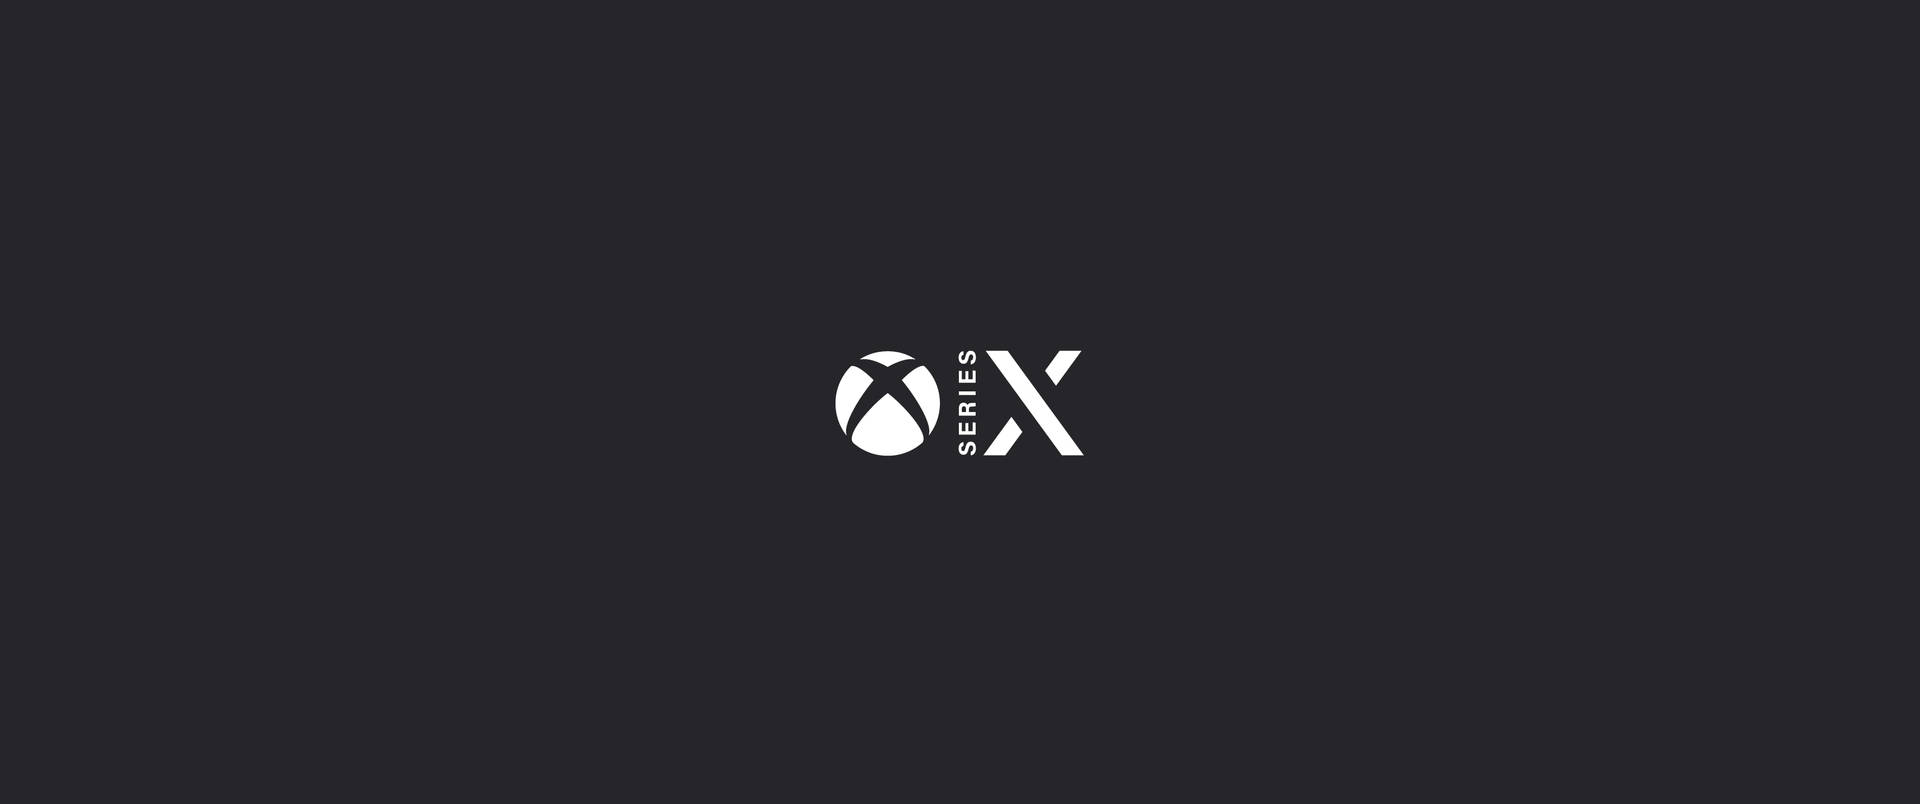 Xboxseries X Minimalista Gris Oscuro Fondo de pantalla